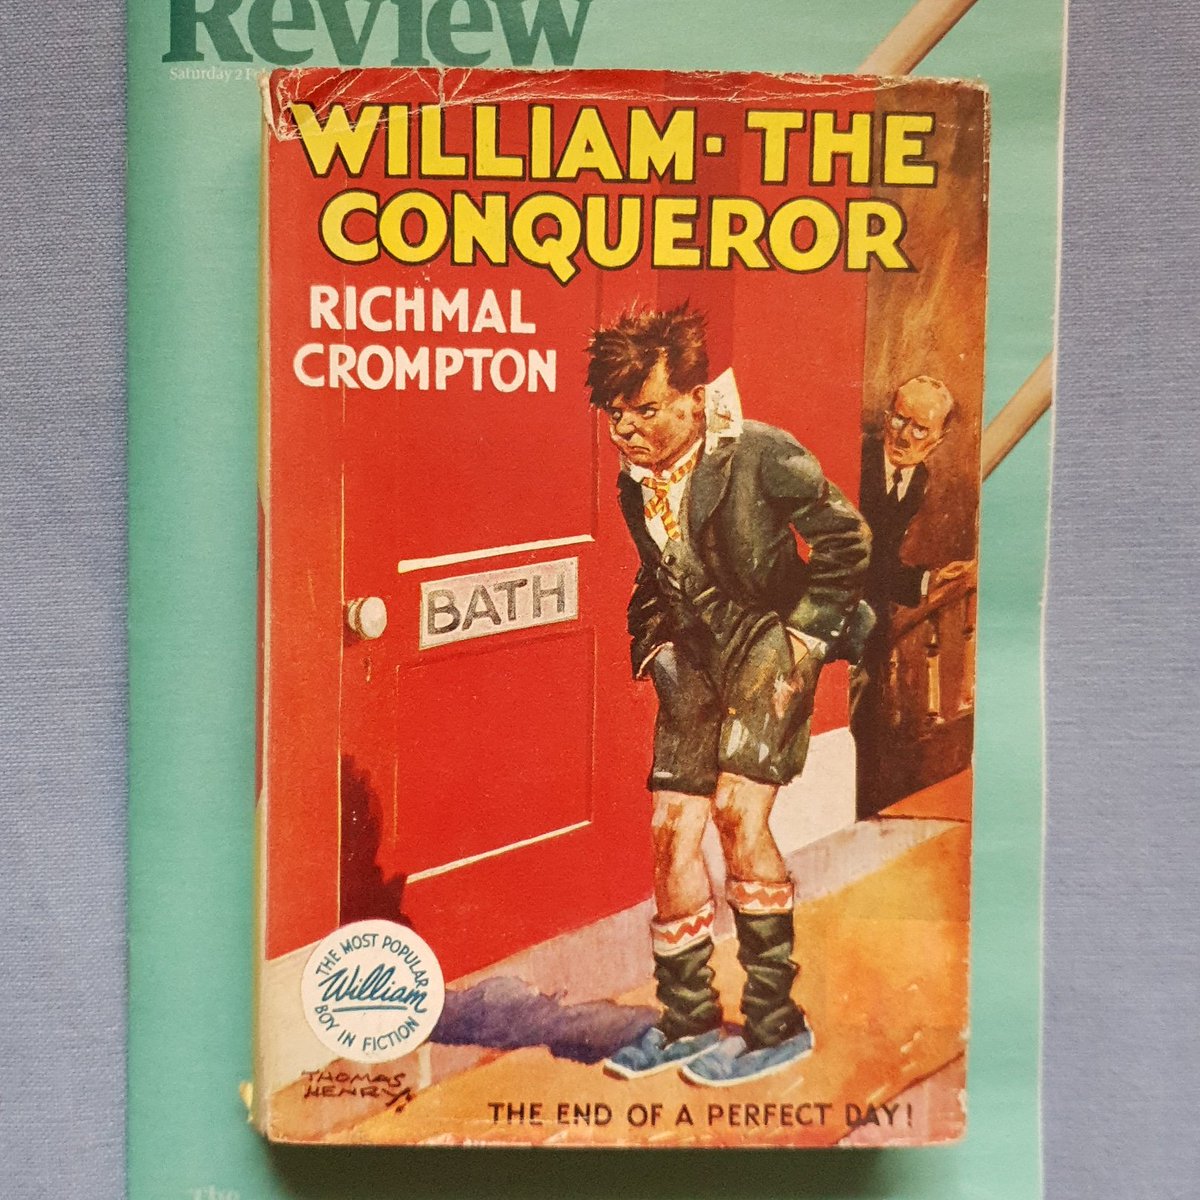 Happy 100th birthday to William #JustWilliam #RichmalCrompton